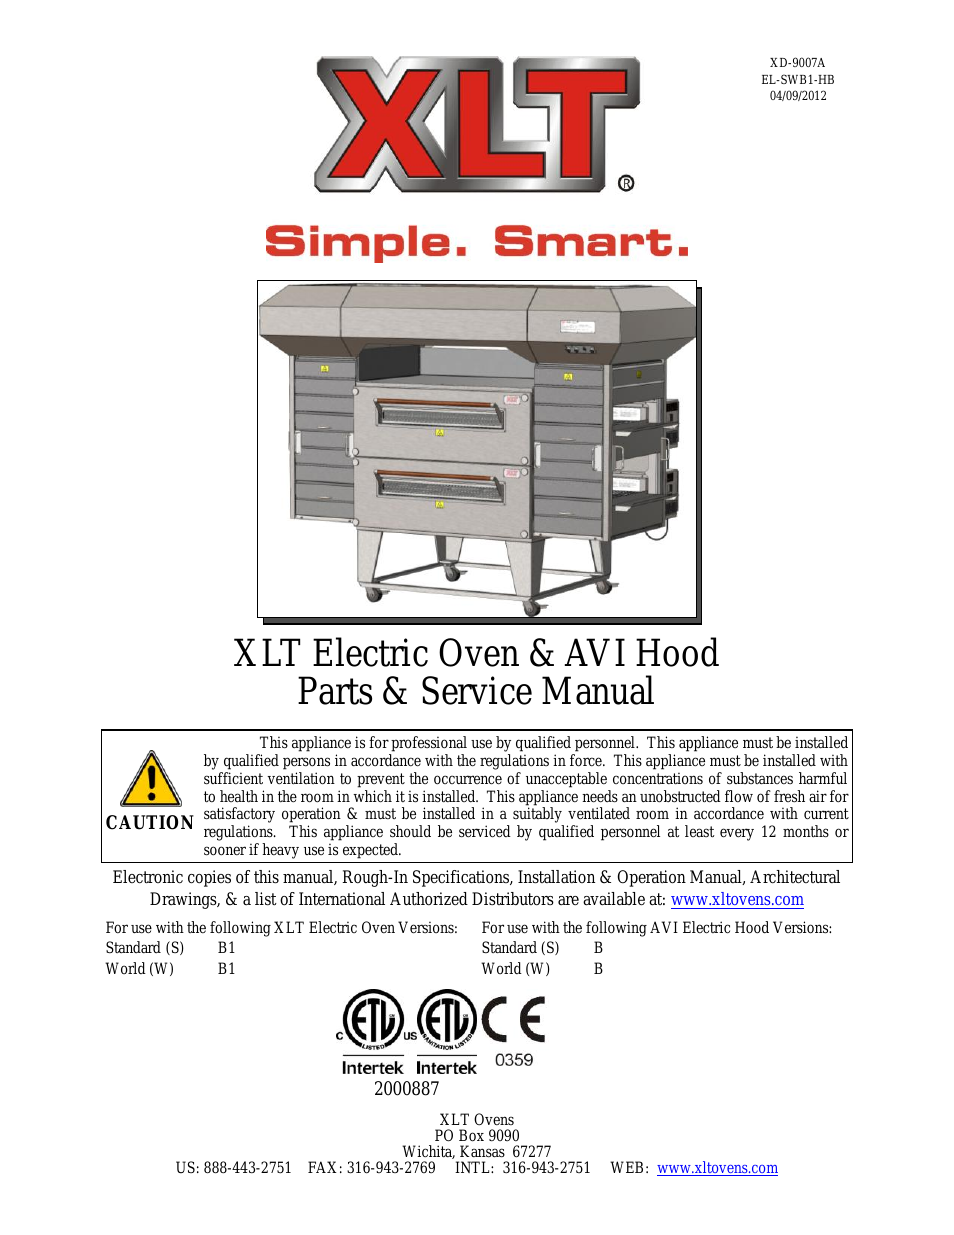 XD-9007A (ELEC Oven Version – B1, AVI Hood Version – B)